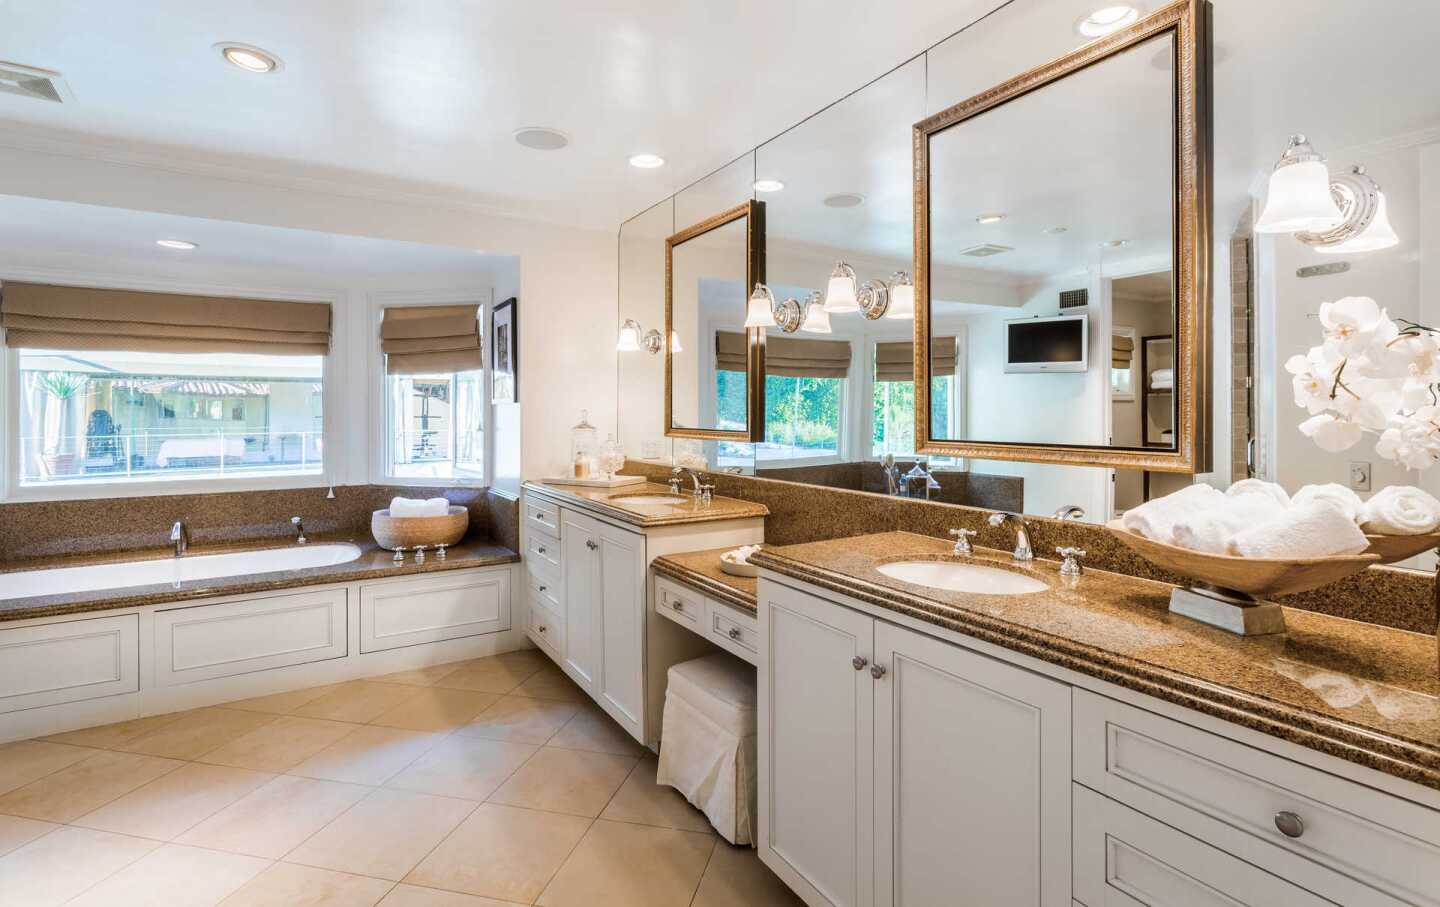 Chris Pratt and Anna Faris' marital home: the master bathroom.